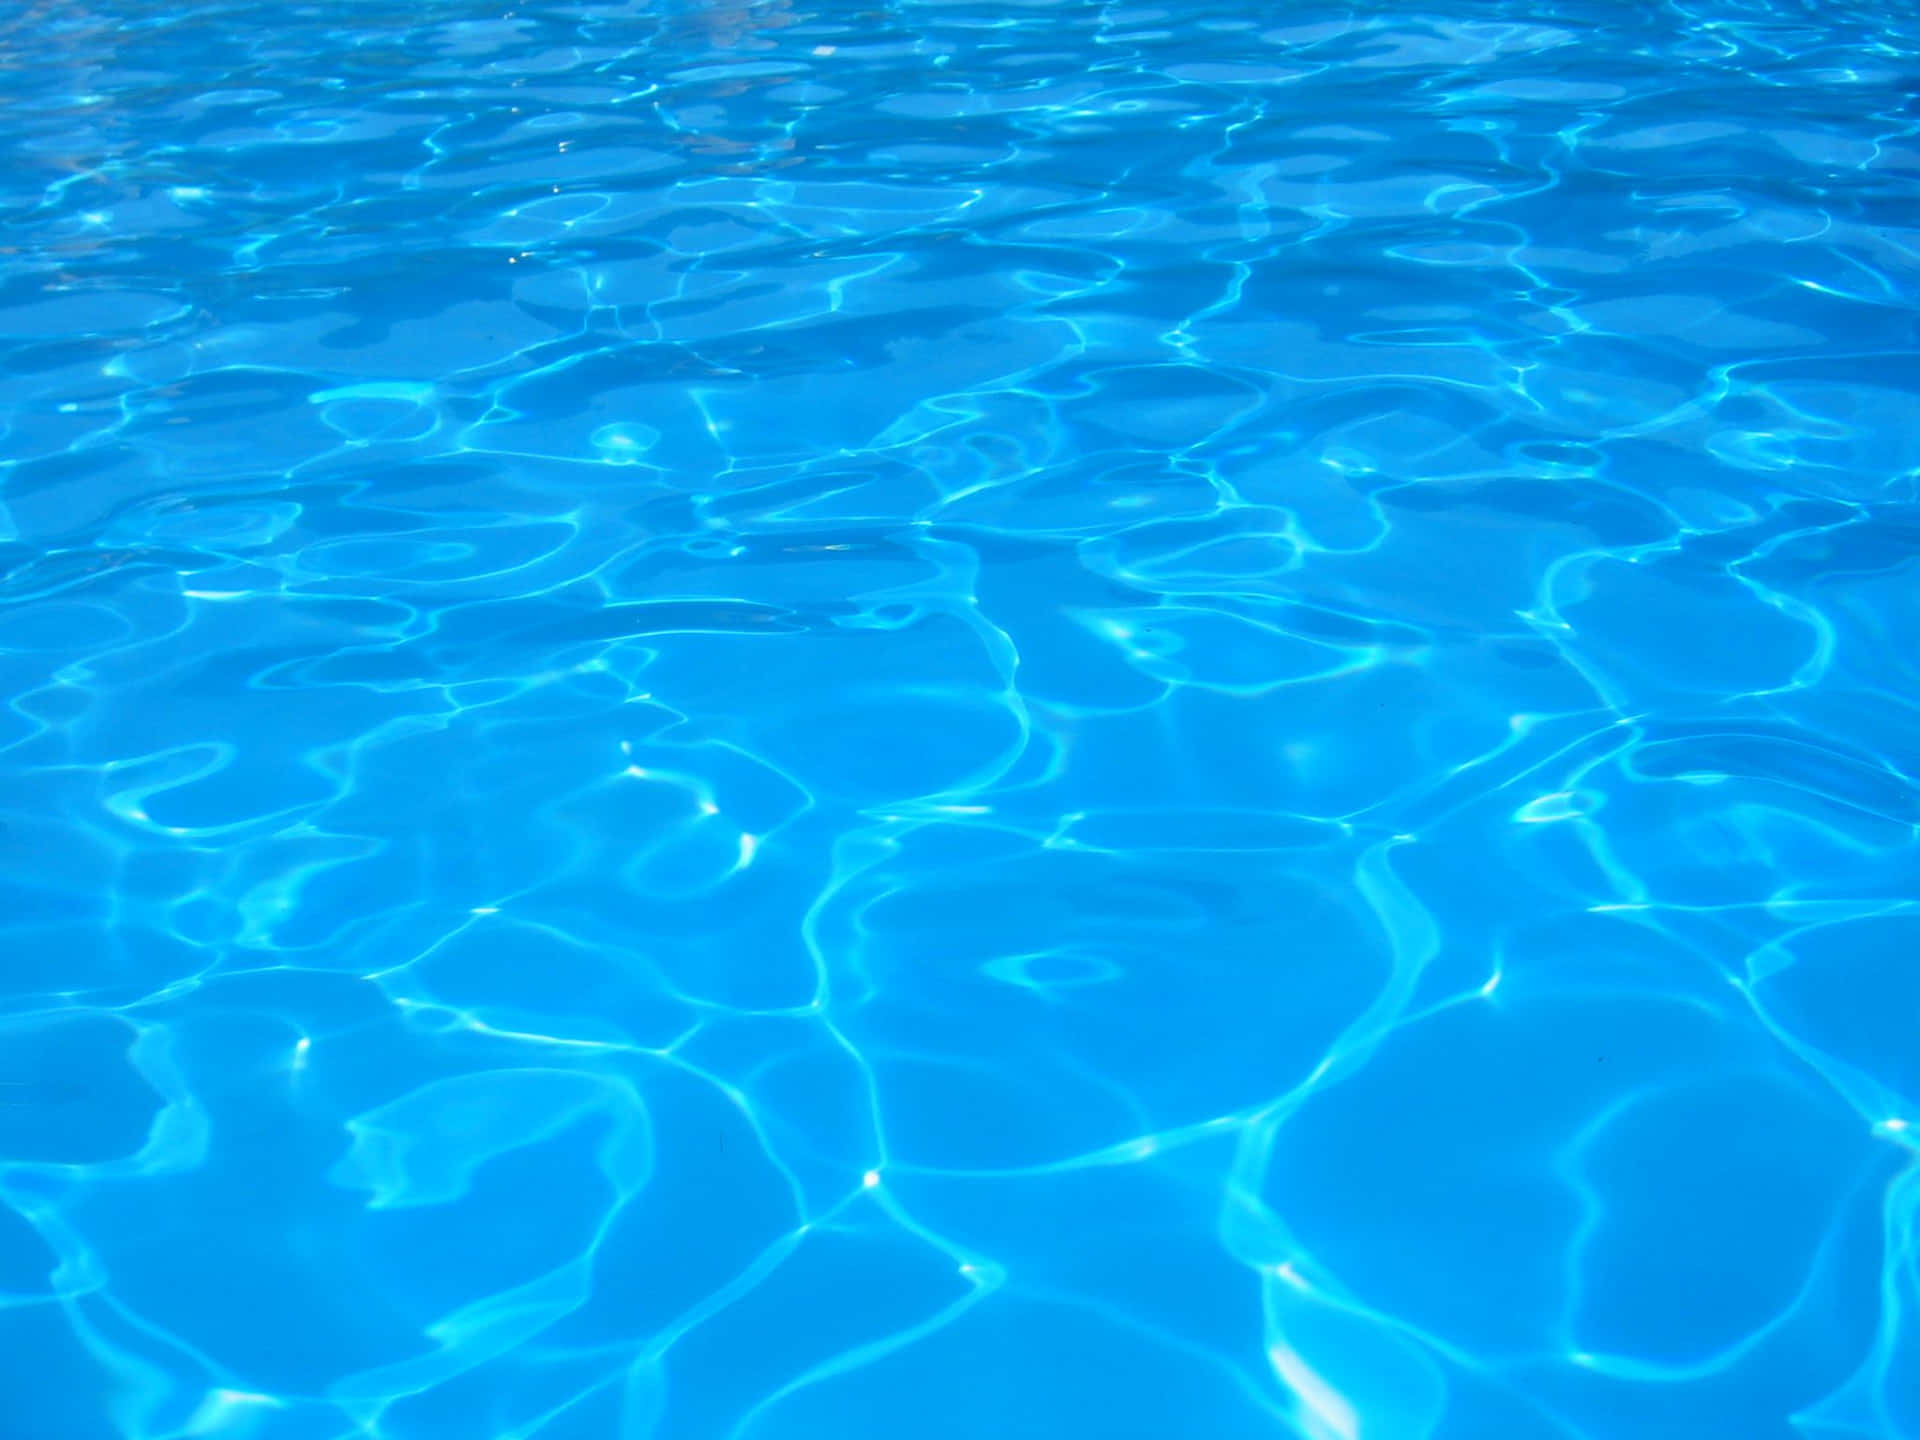 Deep Blue Dazzling Pool Water Wallpaper